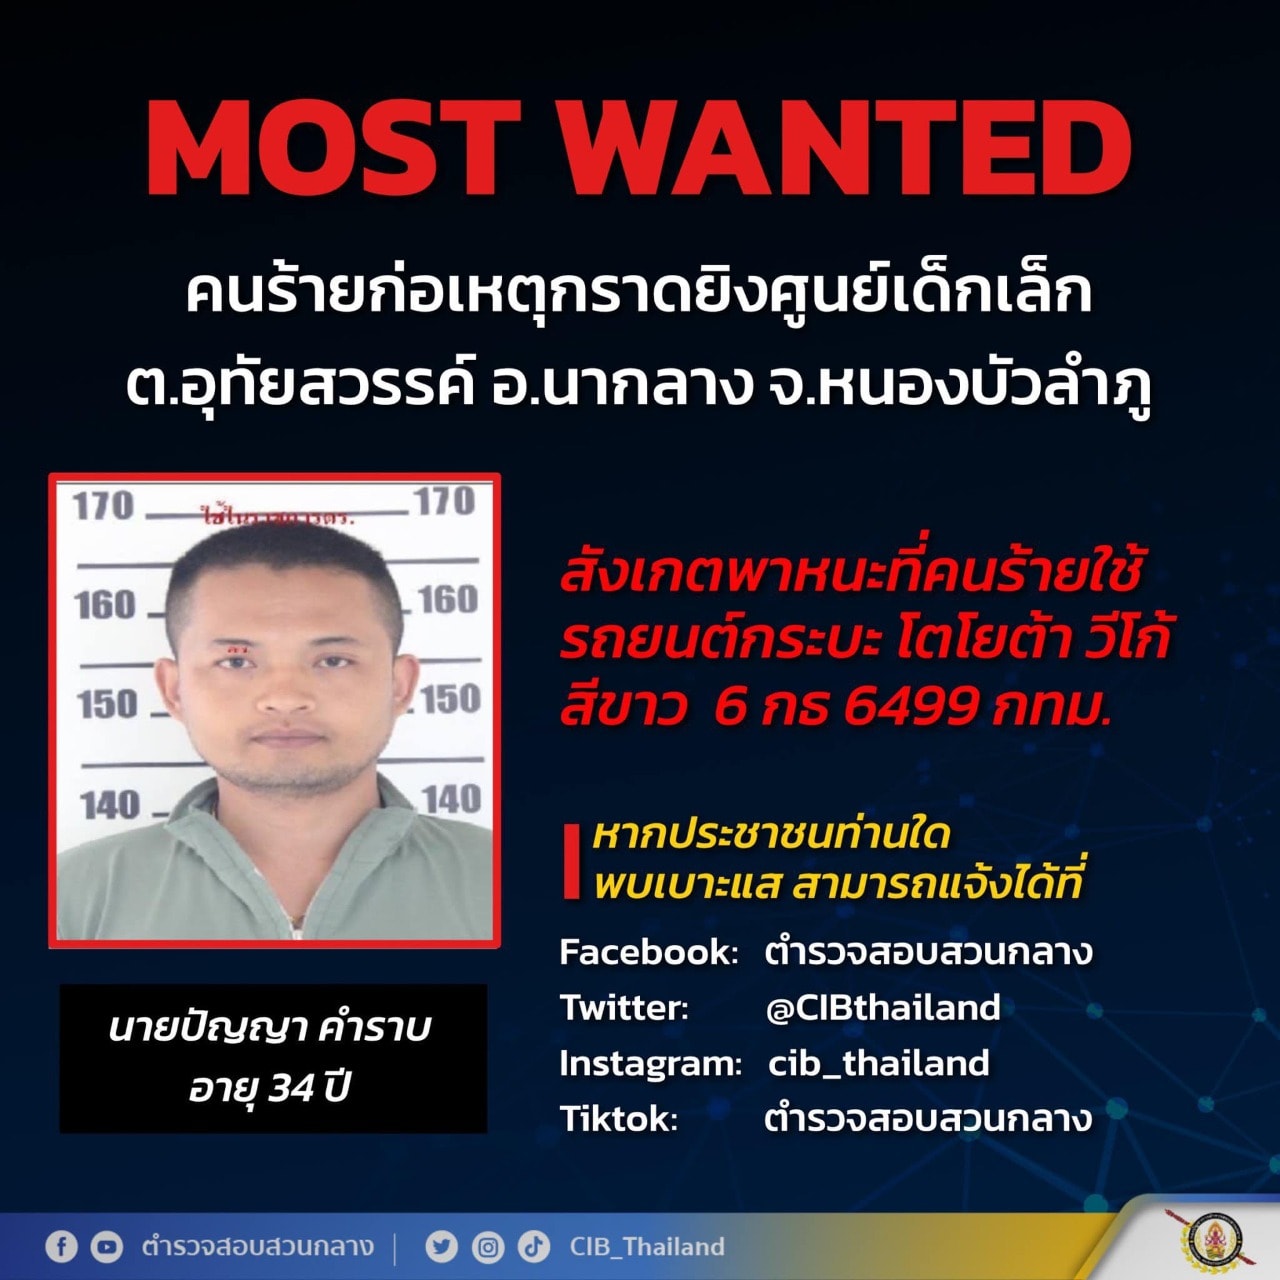 khamrab thailand mass shooting wanted